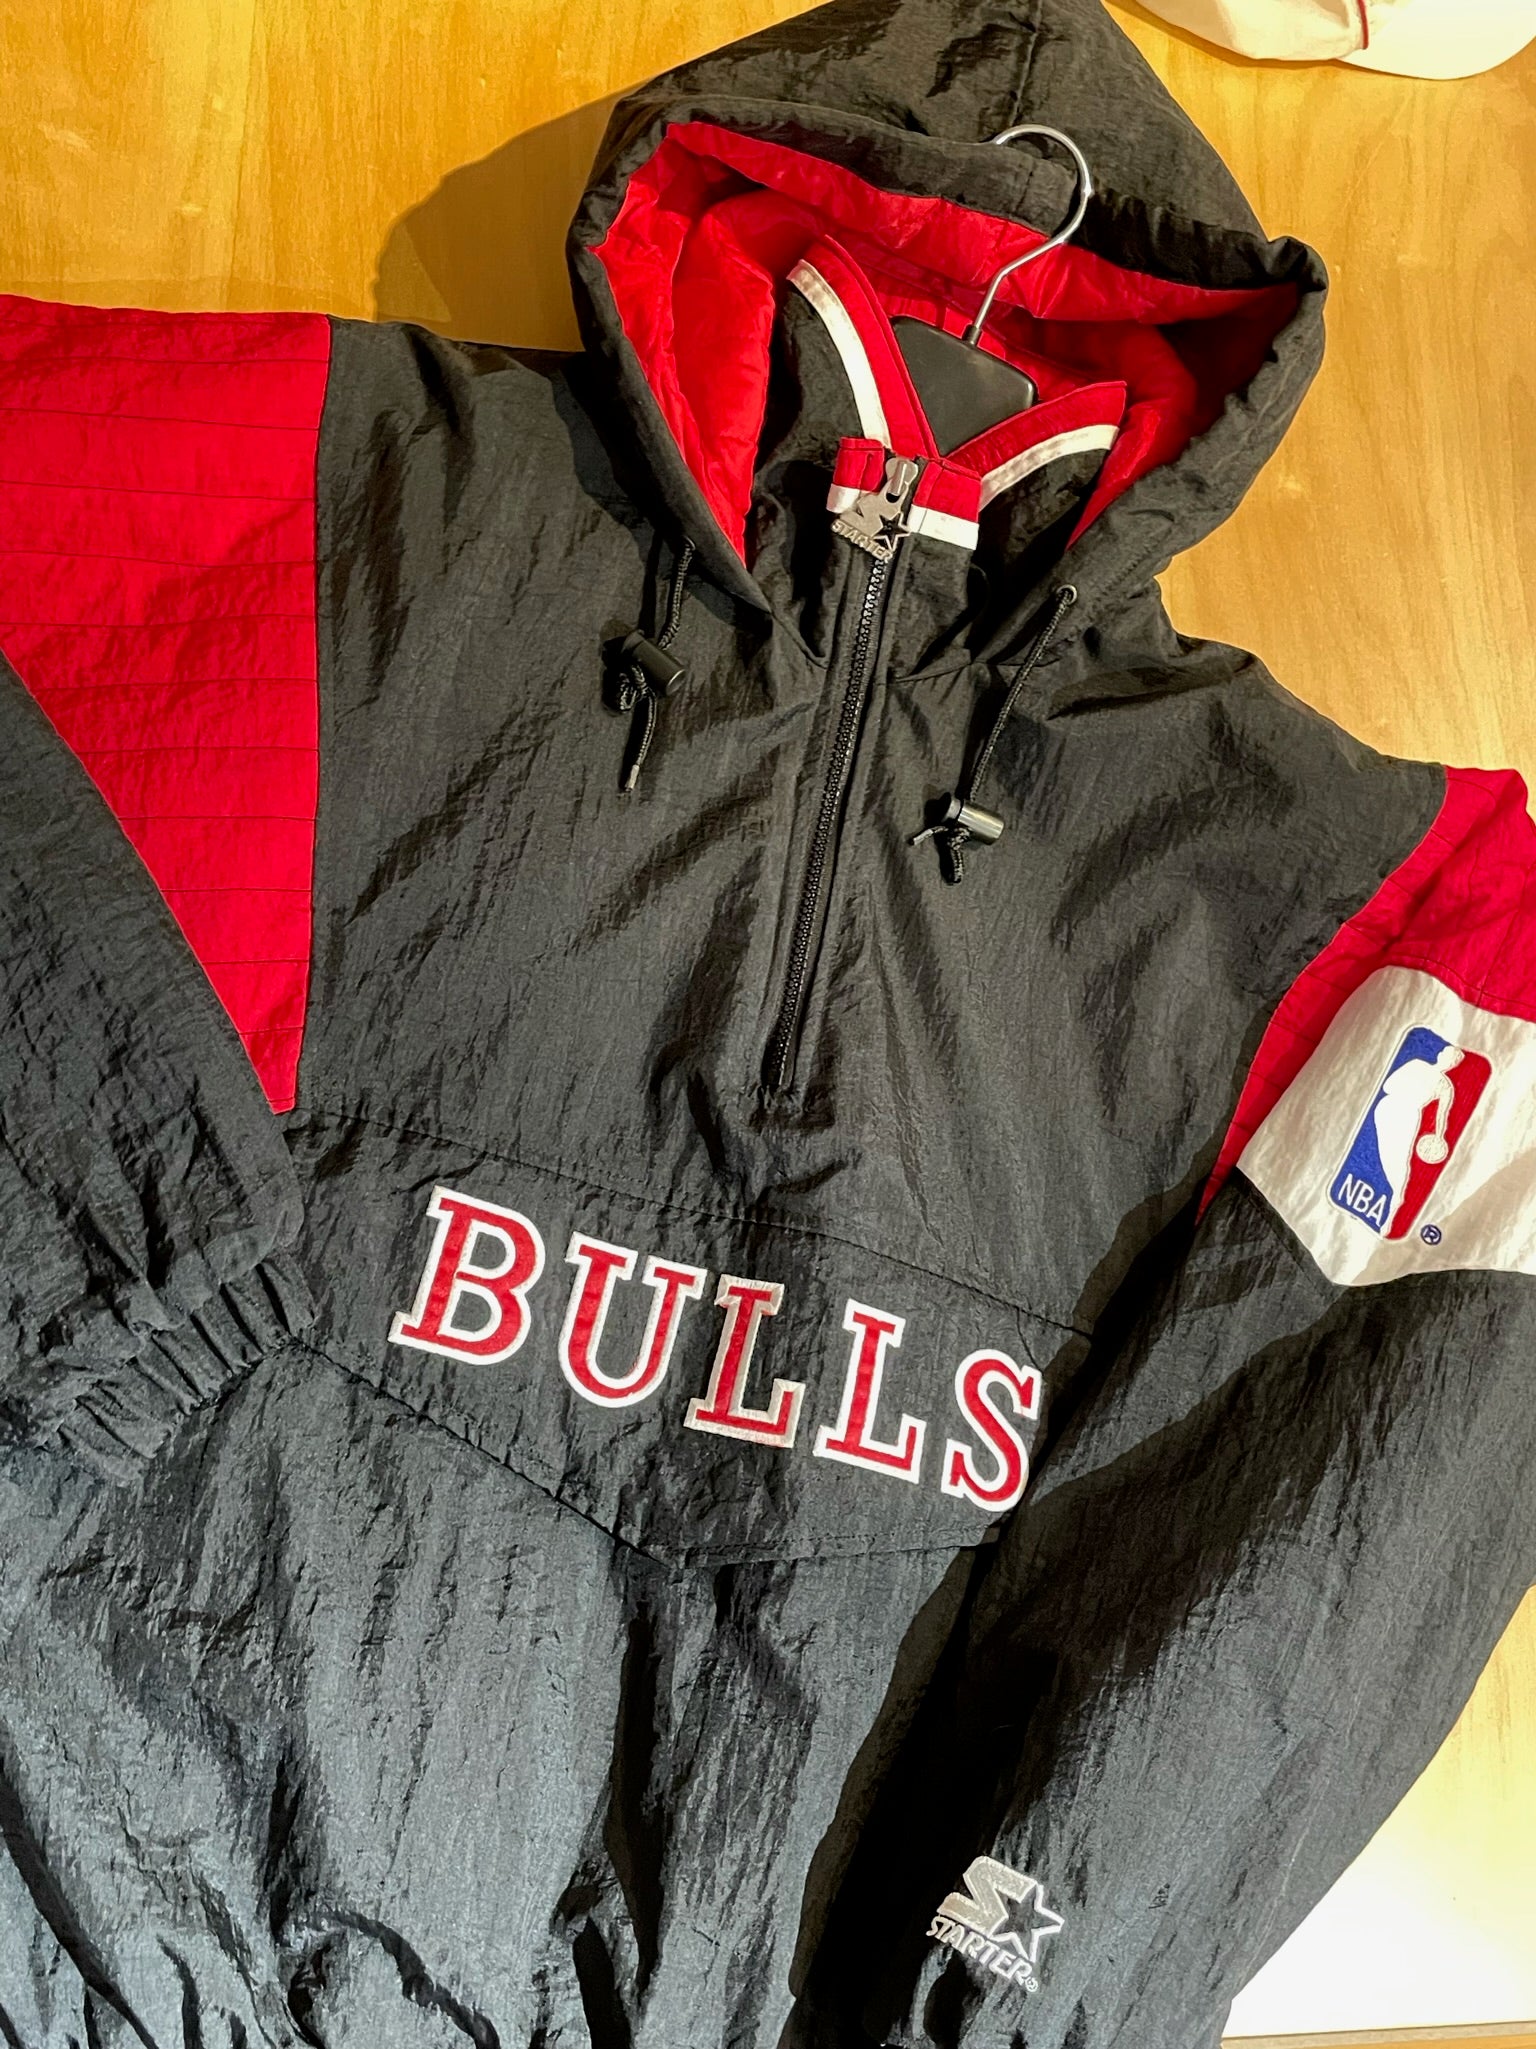 Vintage 90s Era Chicago Bulls Starter Jacket